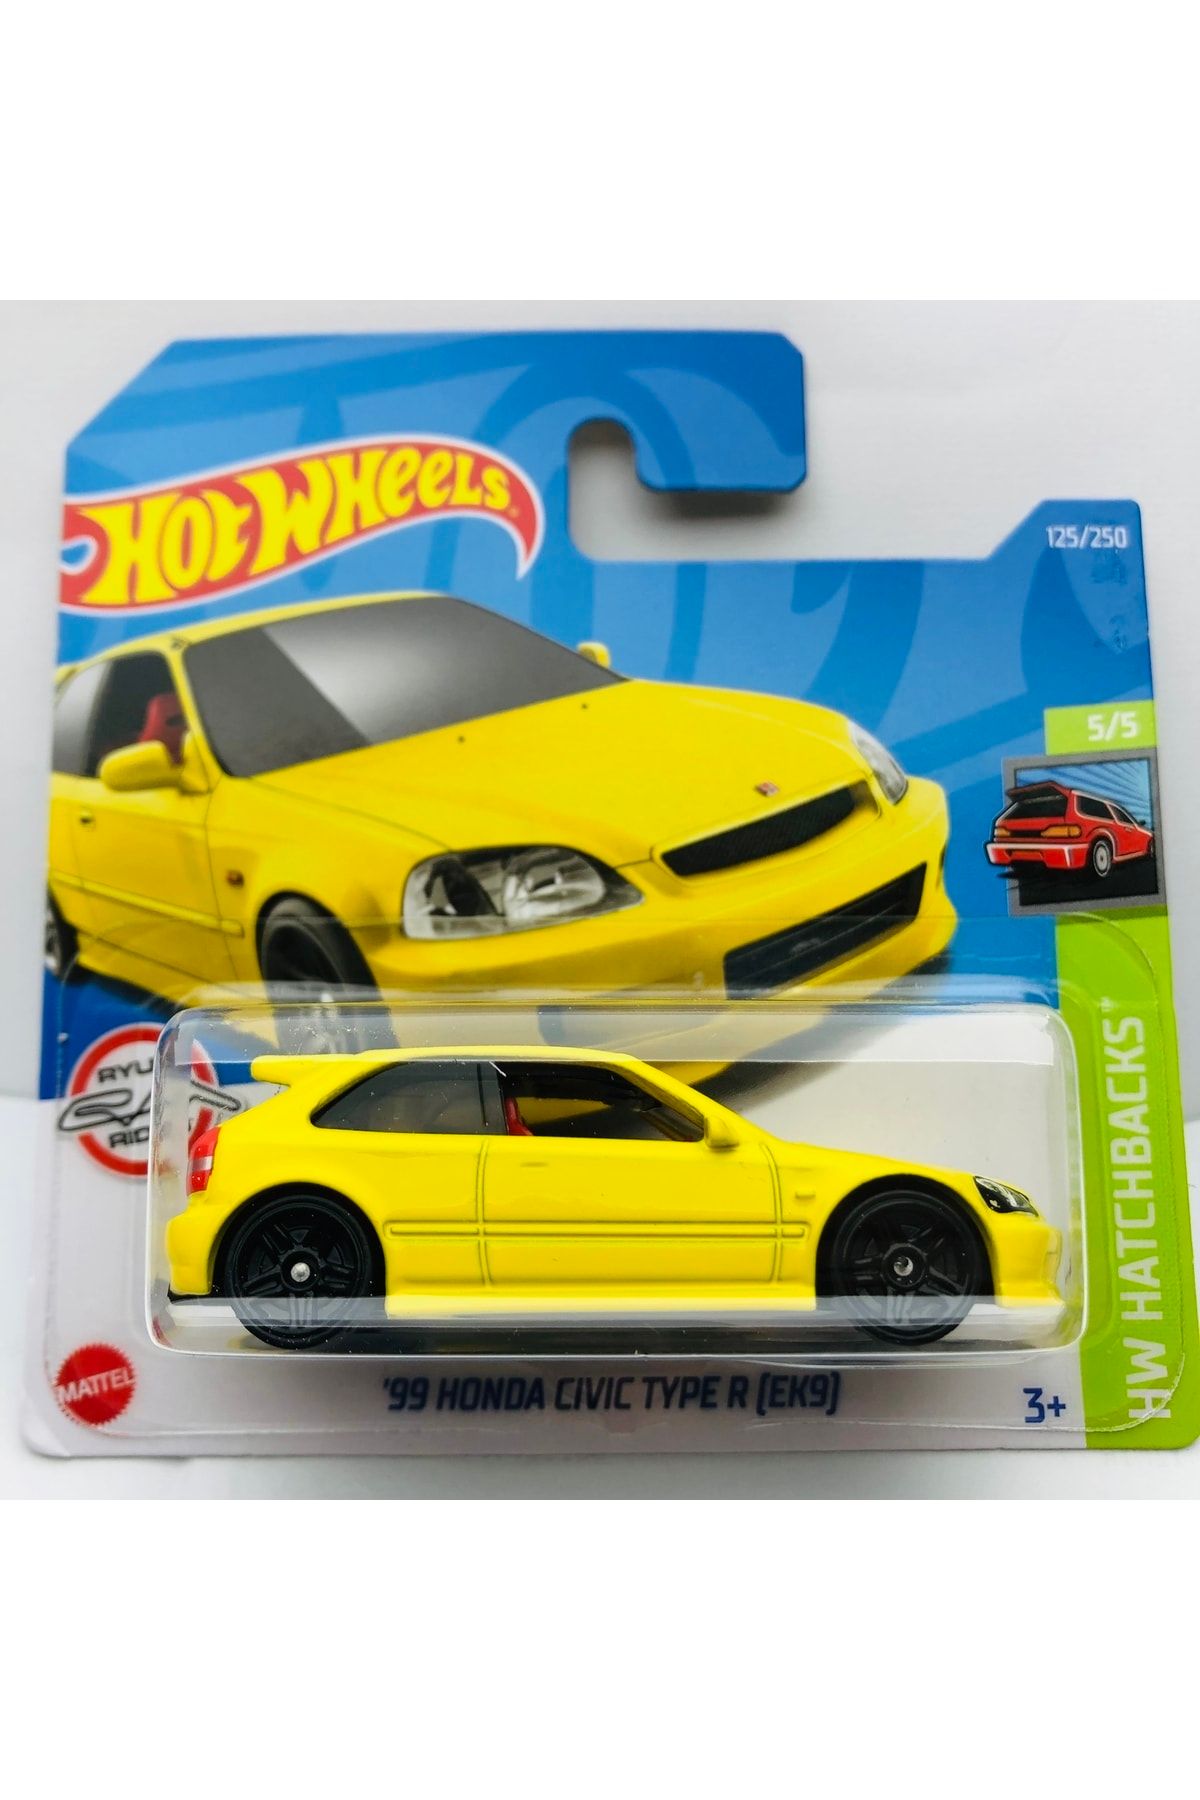 HOT WHEELS 99 Honda Civic Type R (ek9) Yellow 1:64 Ölçek Hotwheels Marka 5/5